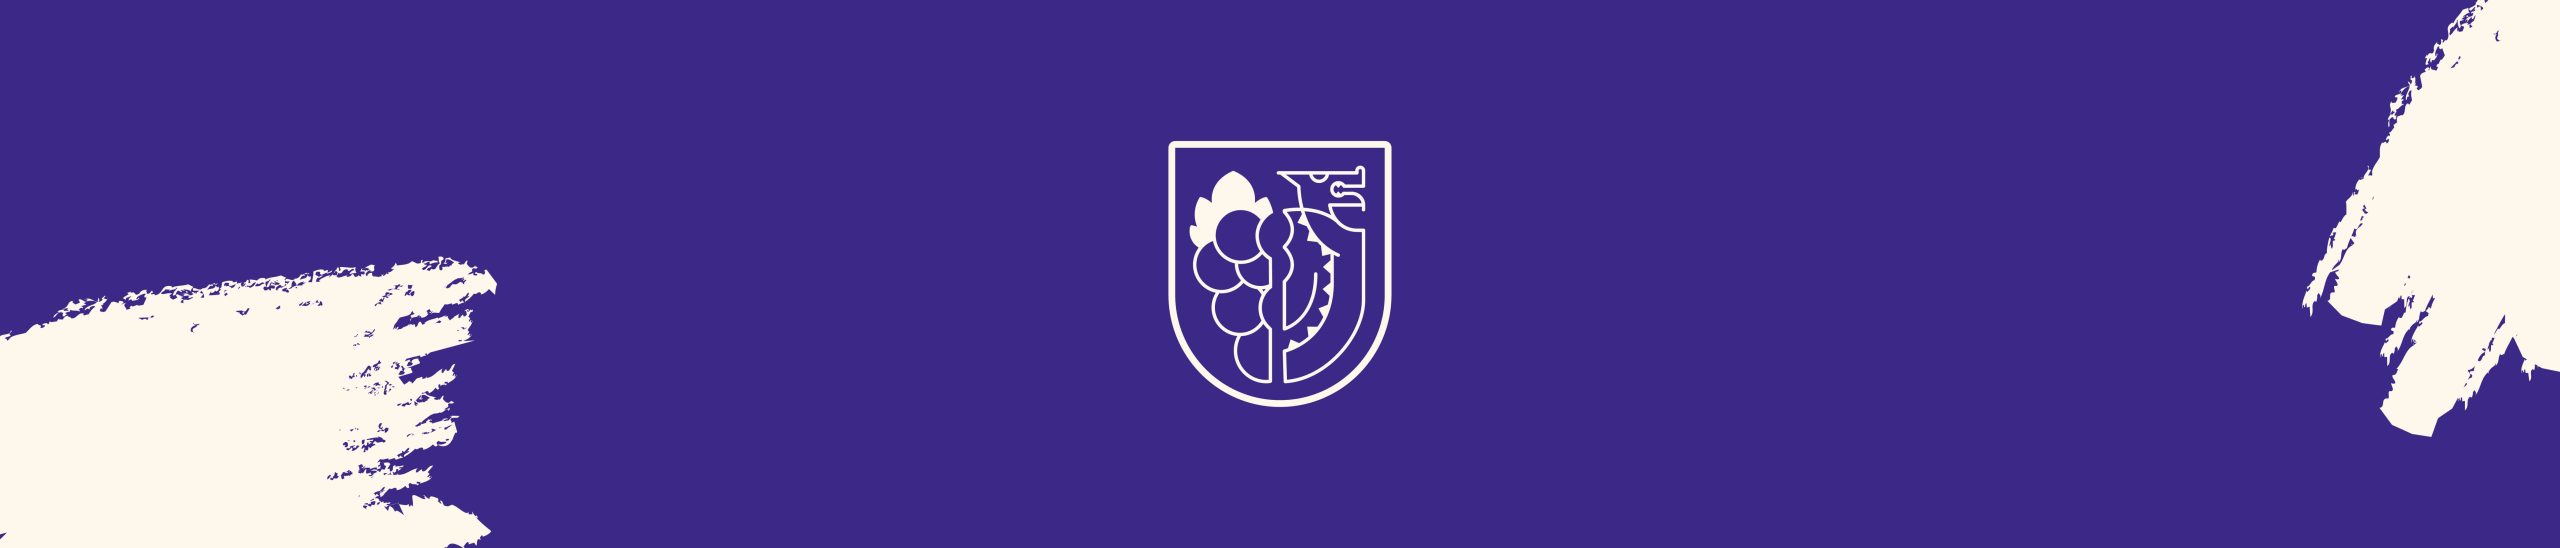 banner violet logo cotes du couchois